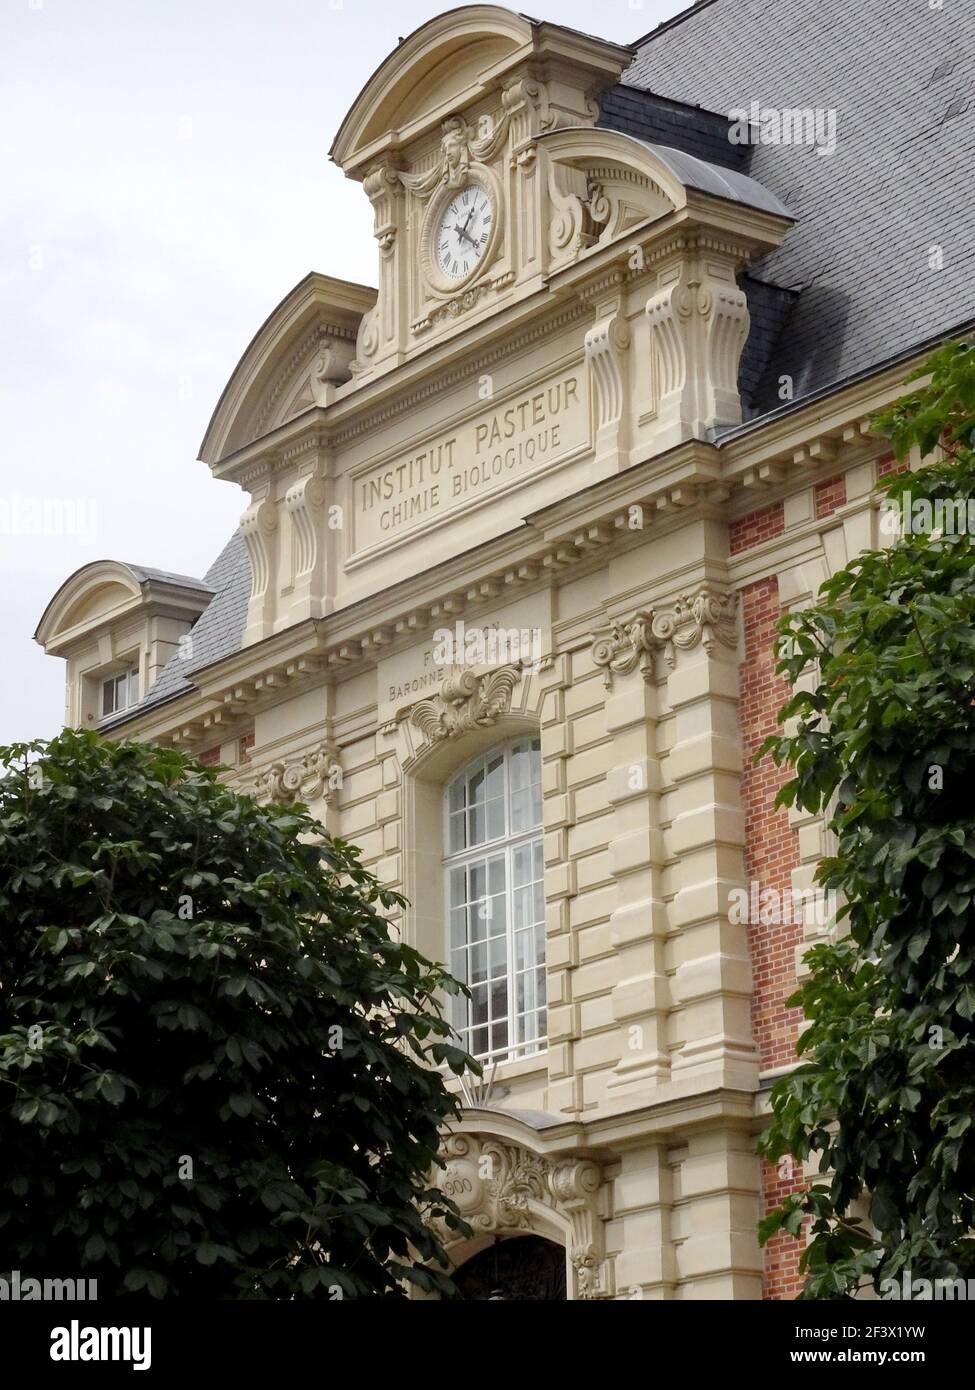 Paris (France): facade of the Pasteur Institute Stock Photo